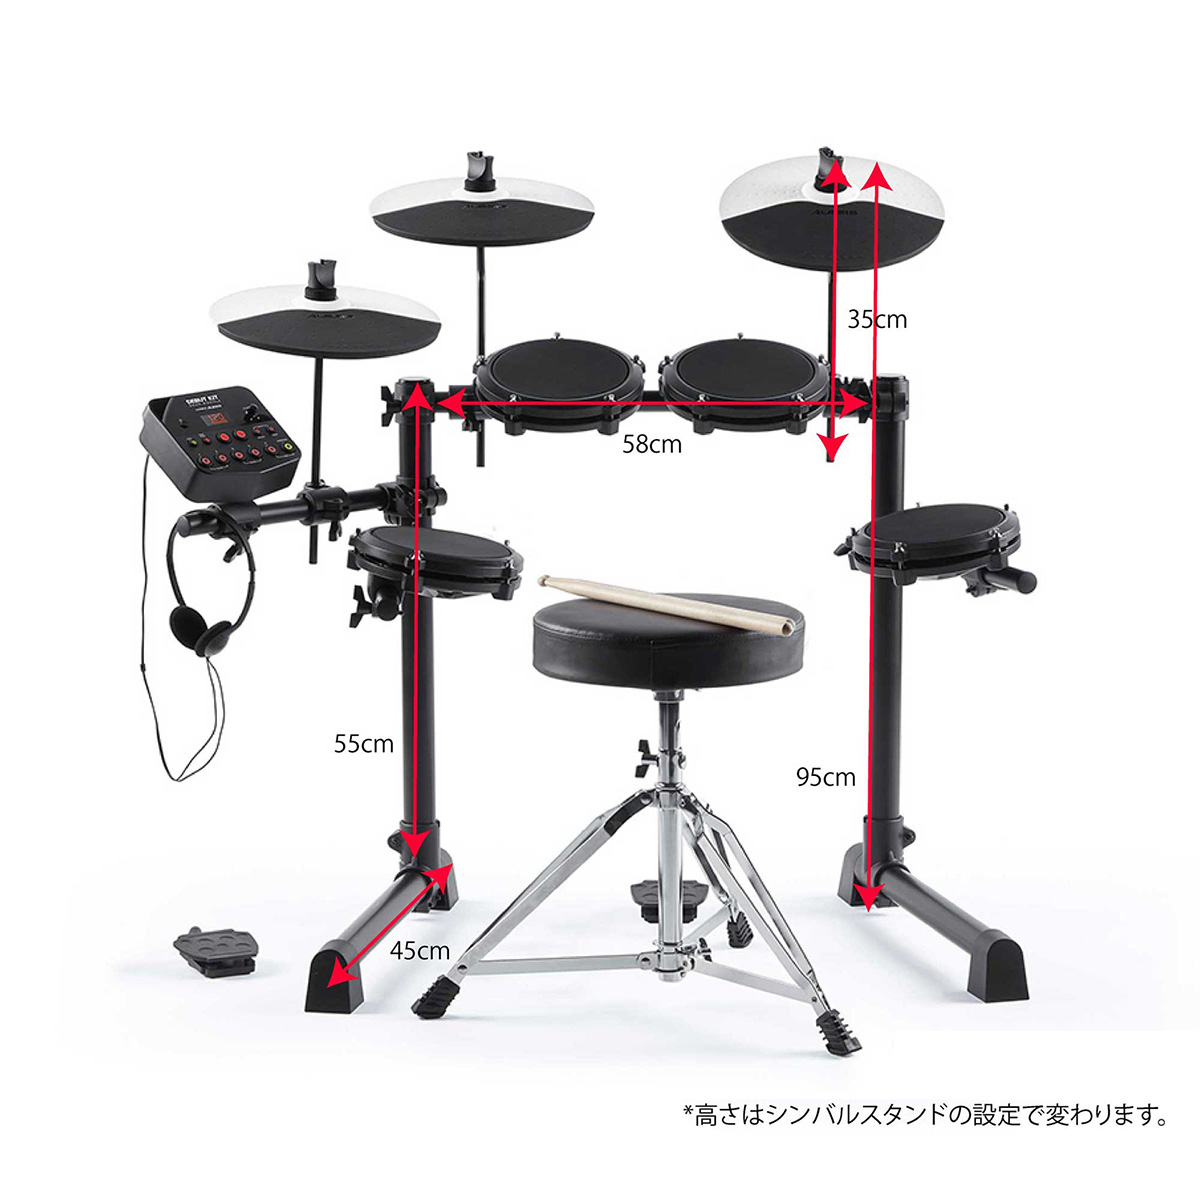 ALESIS Debut Kit フルセット【PM03 スピーカー付】 電子ドラムセット 